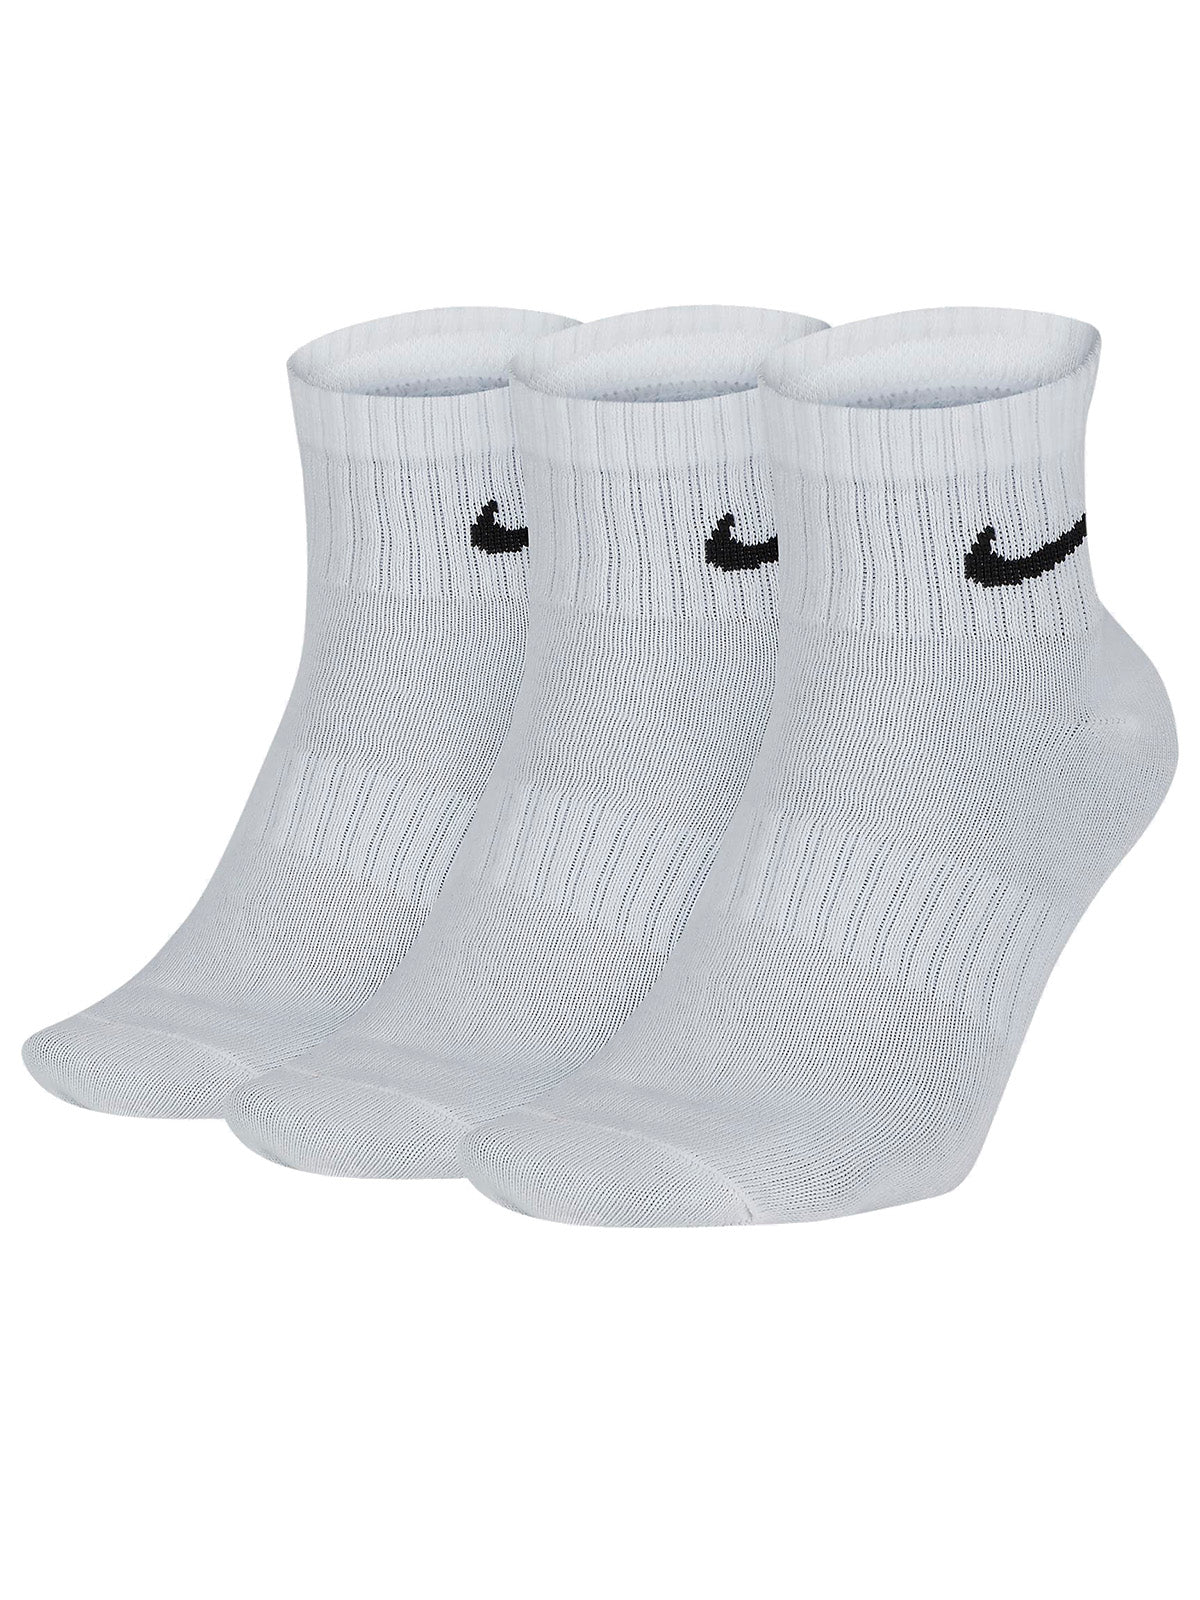 Calze sportive Unisex Nike - Everyday Lightweight Ankle Socks - 3 Pack - Bianco